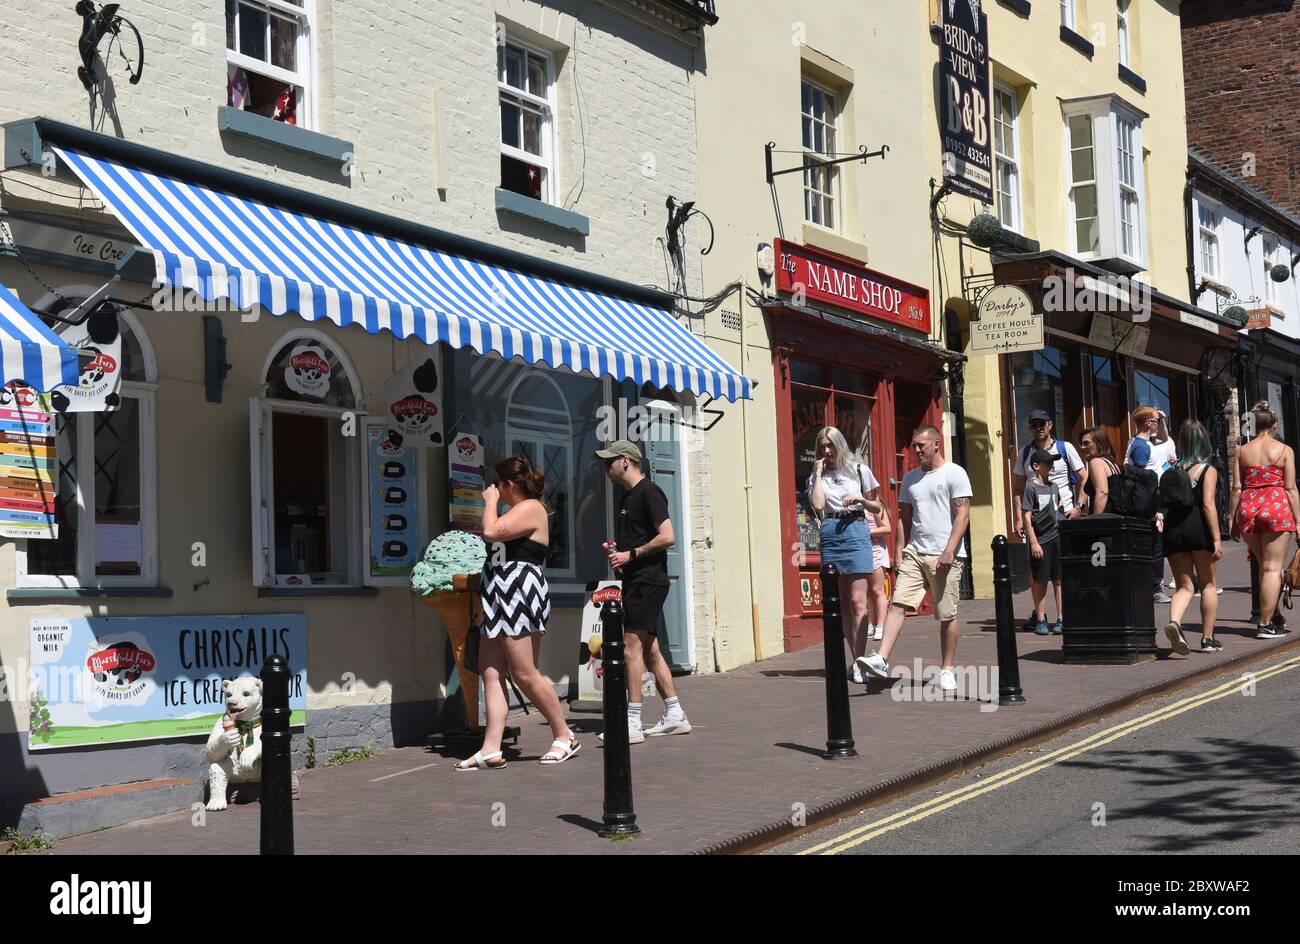 Tourists visitors queueing at ice cream shop in Ironbridge, Shropshire during the Covid-19 Coronavirus pandemic lockdown Britain, Uk, 2020 Stock Photo